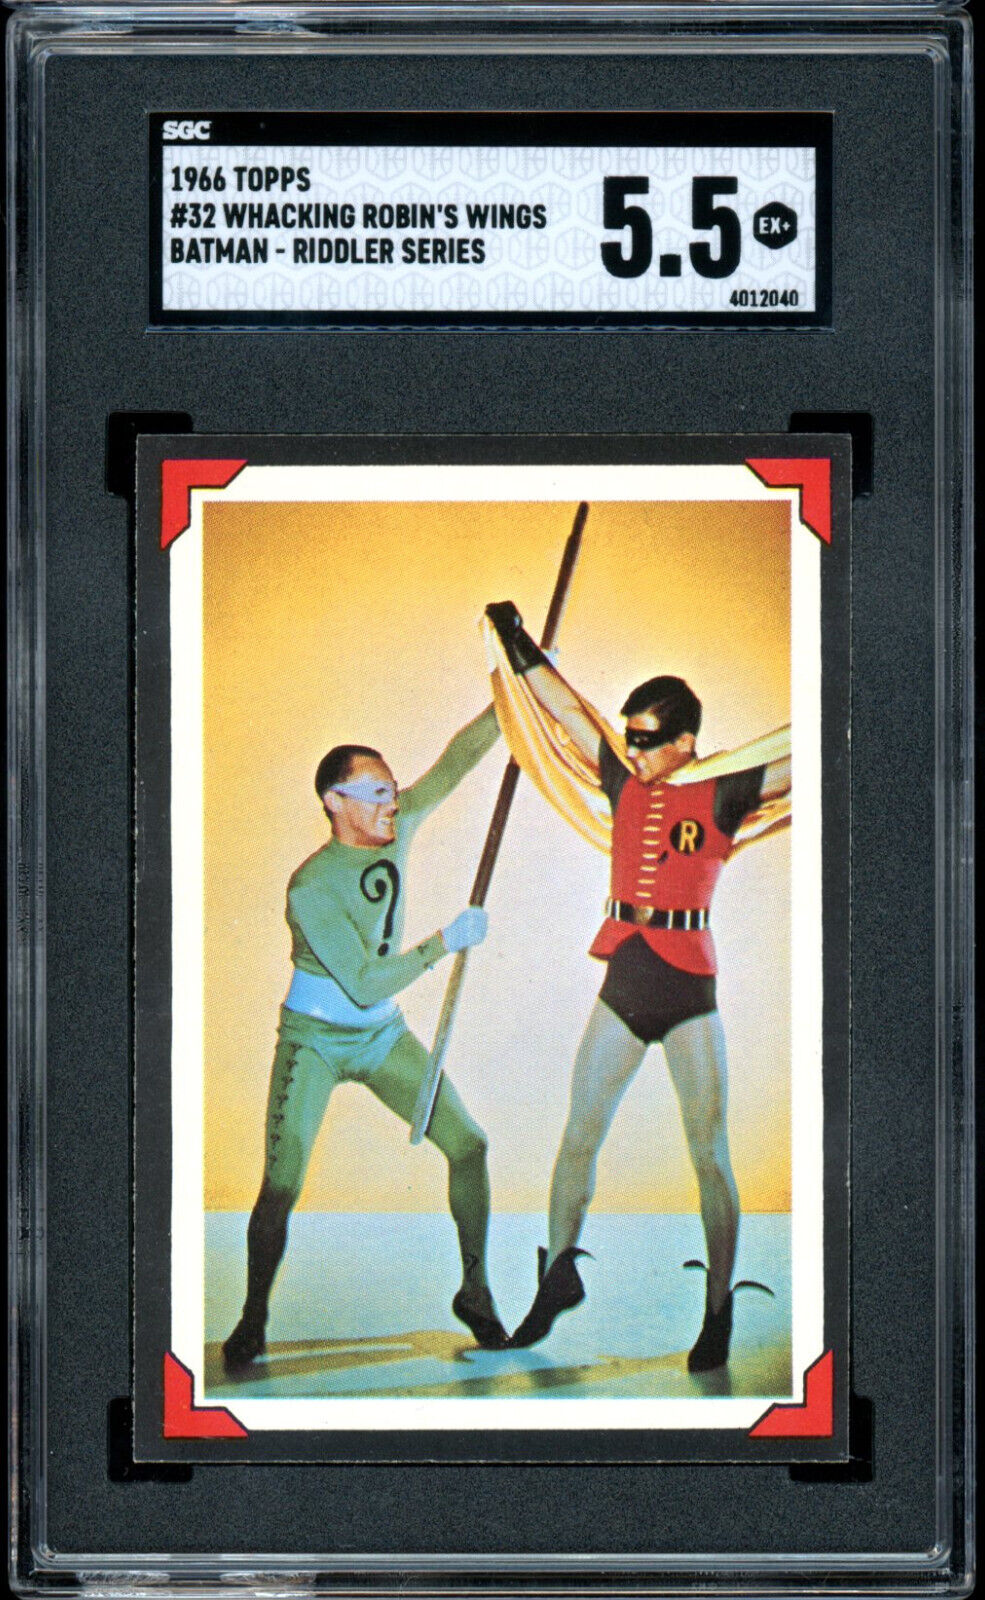 1966 TOPPS USA BATMAN Riddler Back #32 Whacking Robin's Wings SGC 5.5 EX+ Card